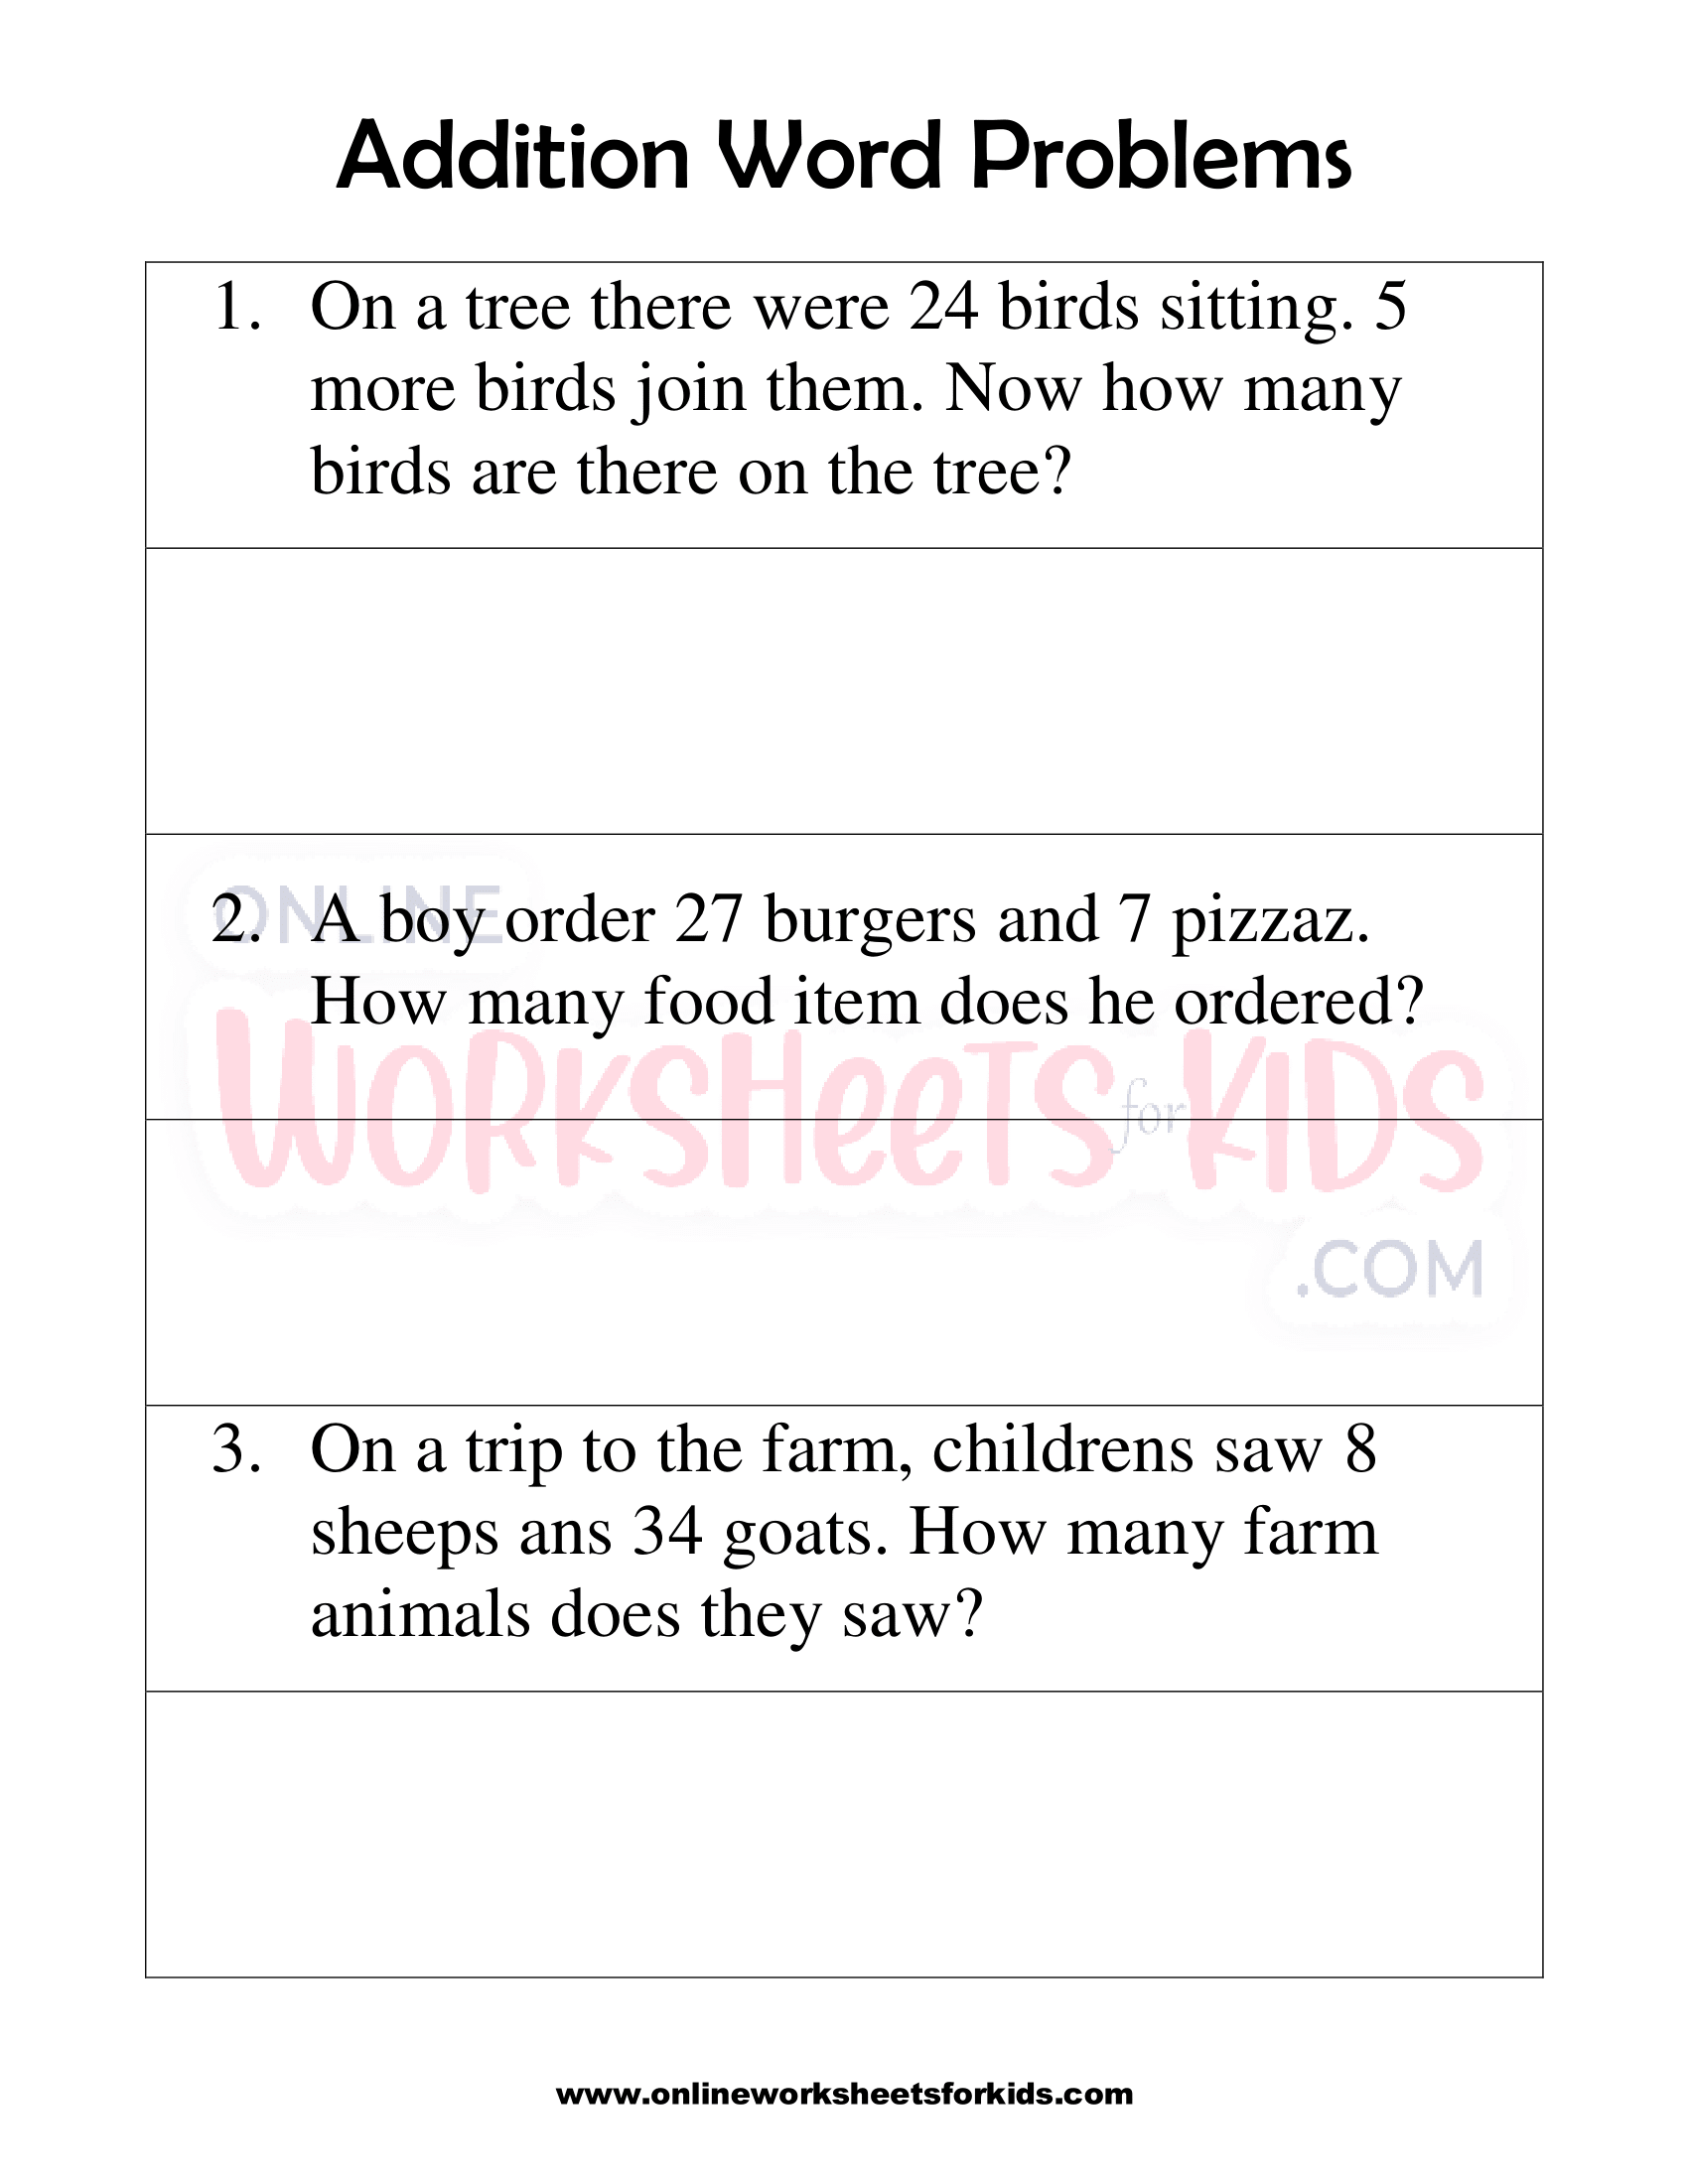 Addition Word Problems Worksheets Grade 1-3